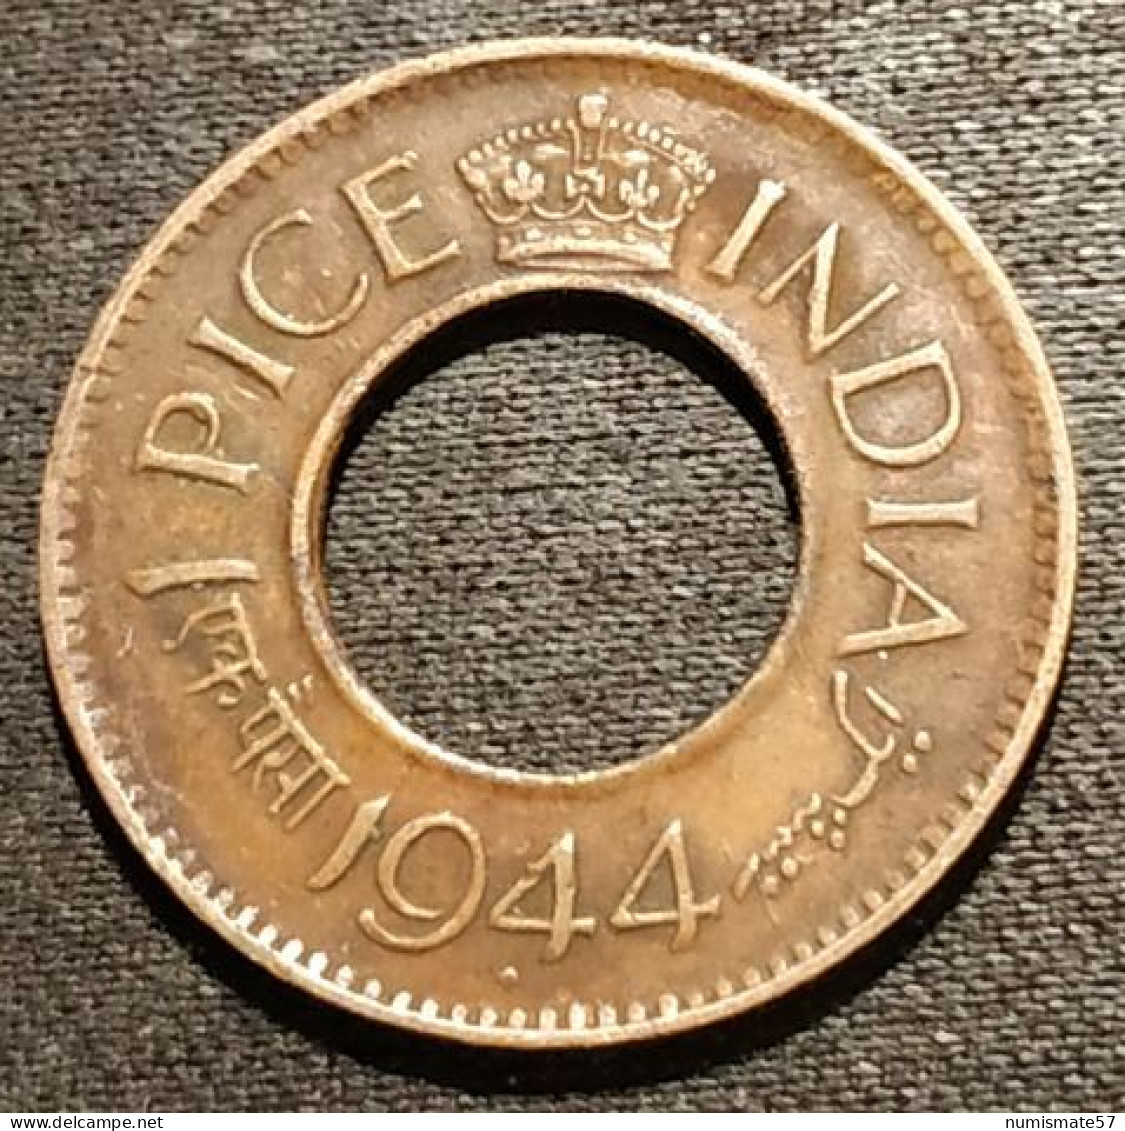 INDE - INDIA - 1 PICE 1944 - George VI - KM 533 - Indien